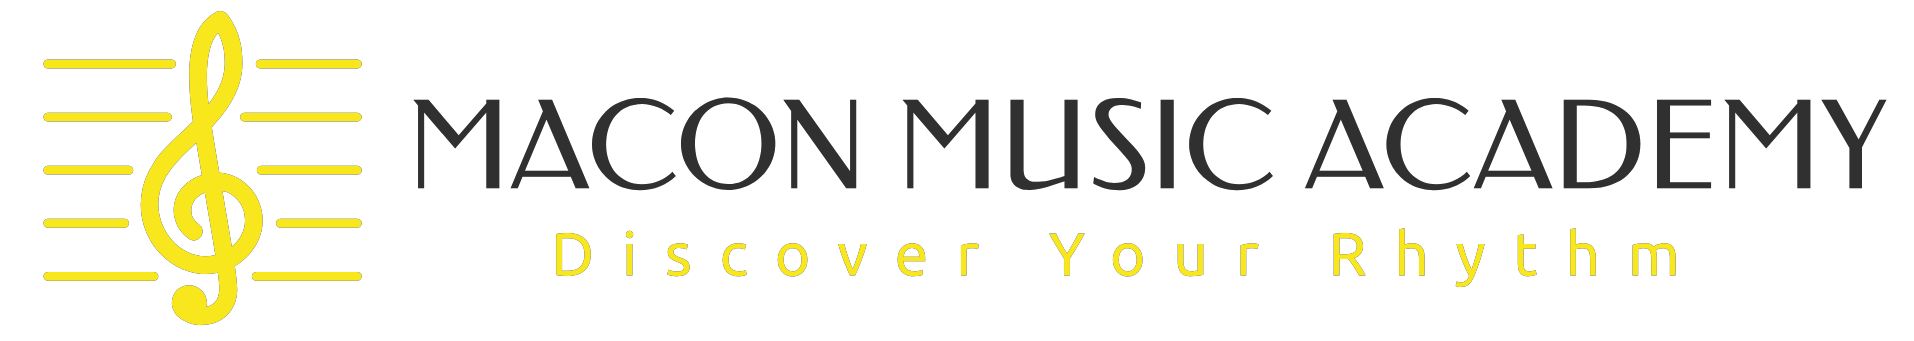 Macon Music Academy logo